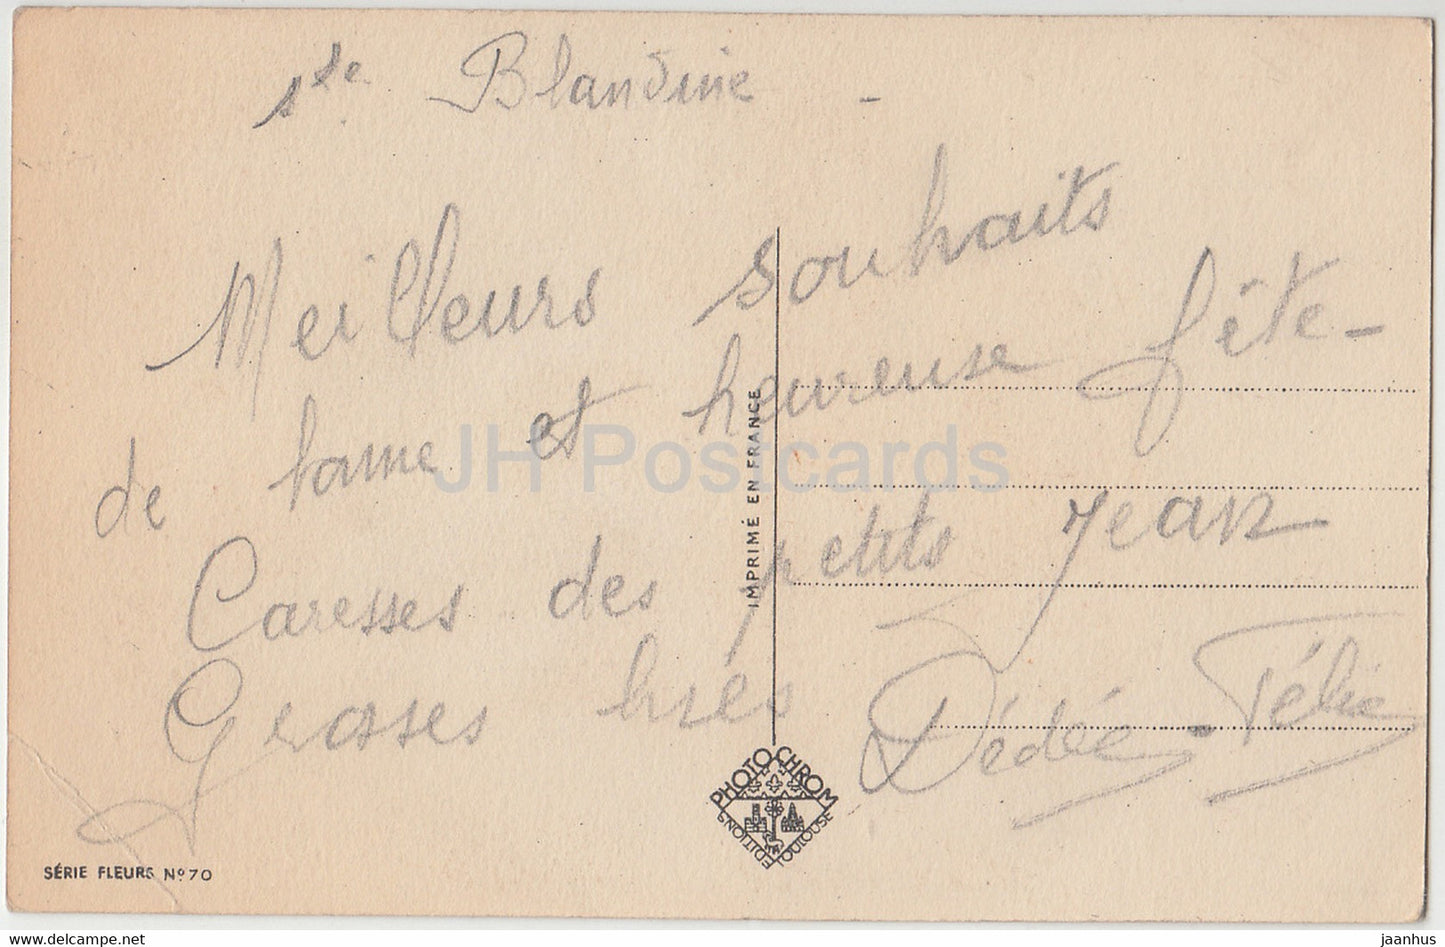 Birthday Greeting Card - Bonne Fete - flowers - tulips - Serie Fleurs - 70 - illustration - old postcard - France - used